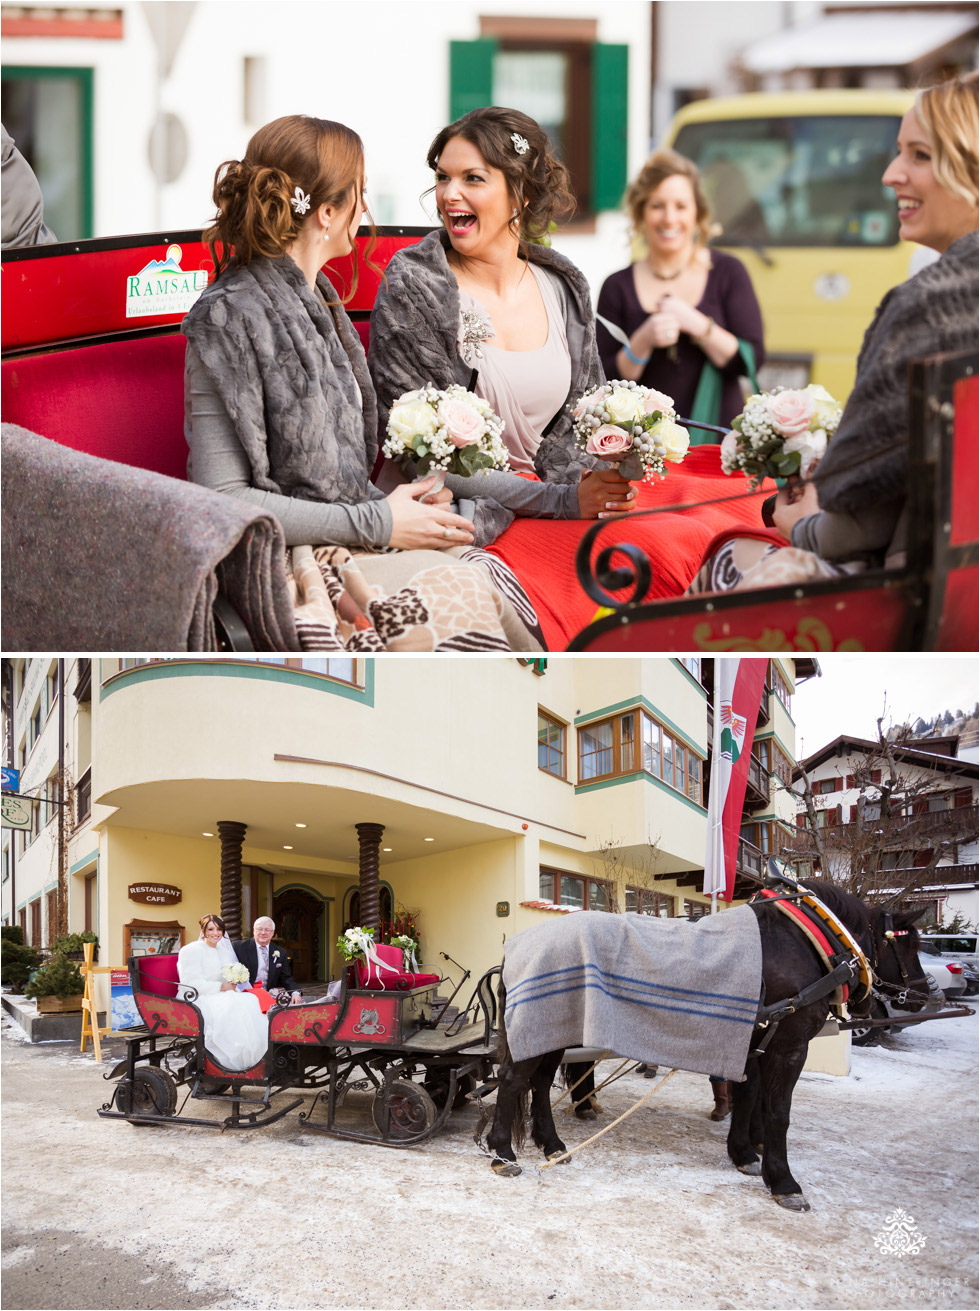 Winter Wedding in St. Anton, Arlberg | UK meets Austria | Helen & James - Blog of Nina Hintringer Photography - Wedding Photography, Wedding Reportage and Destination Weddings